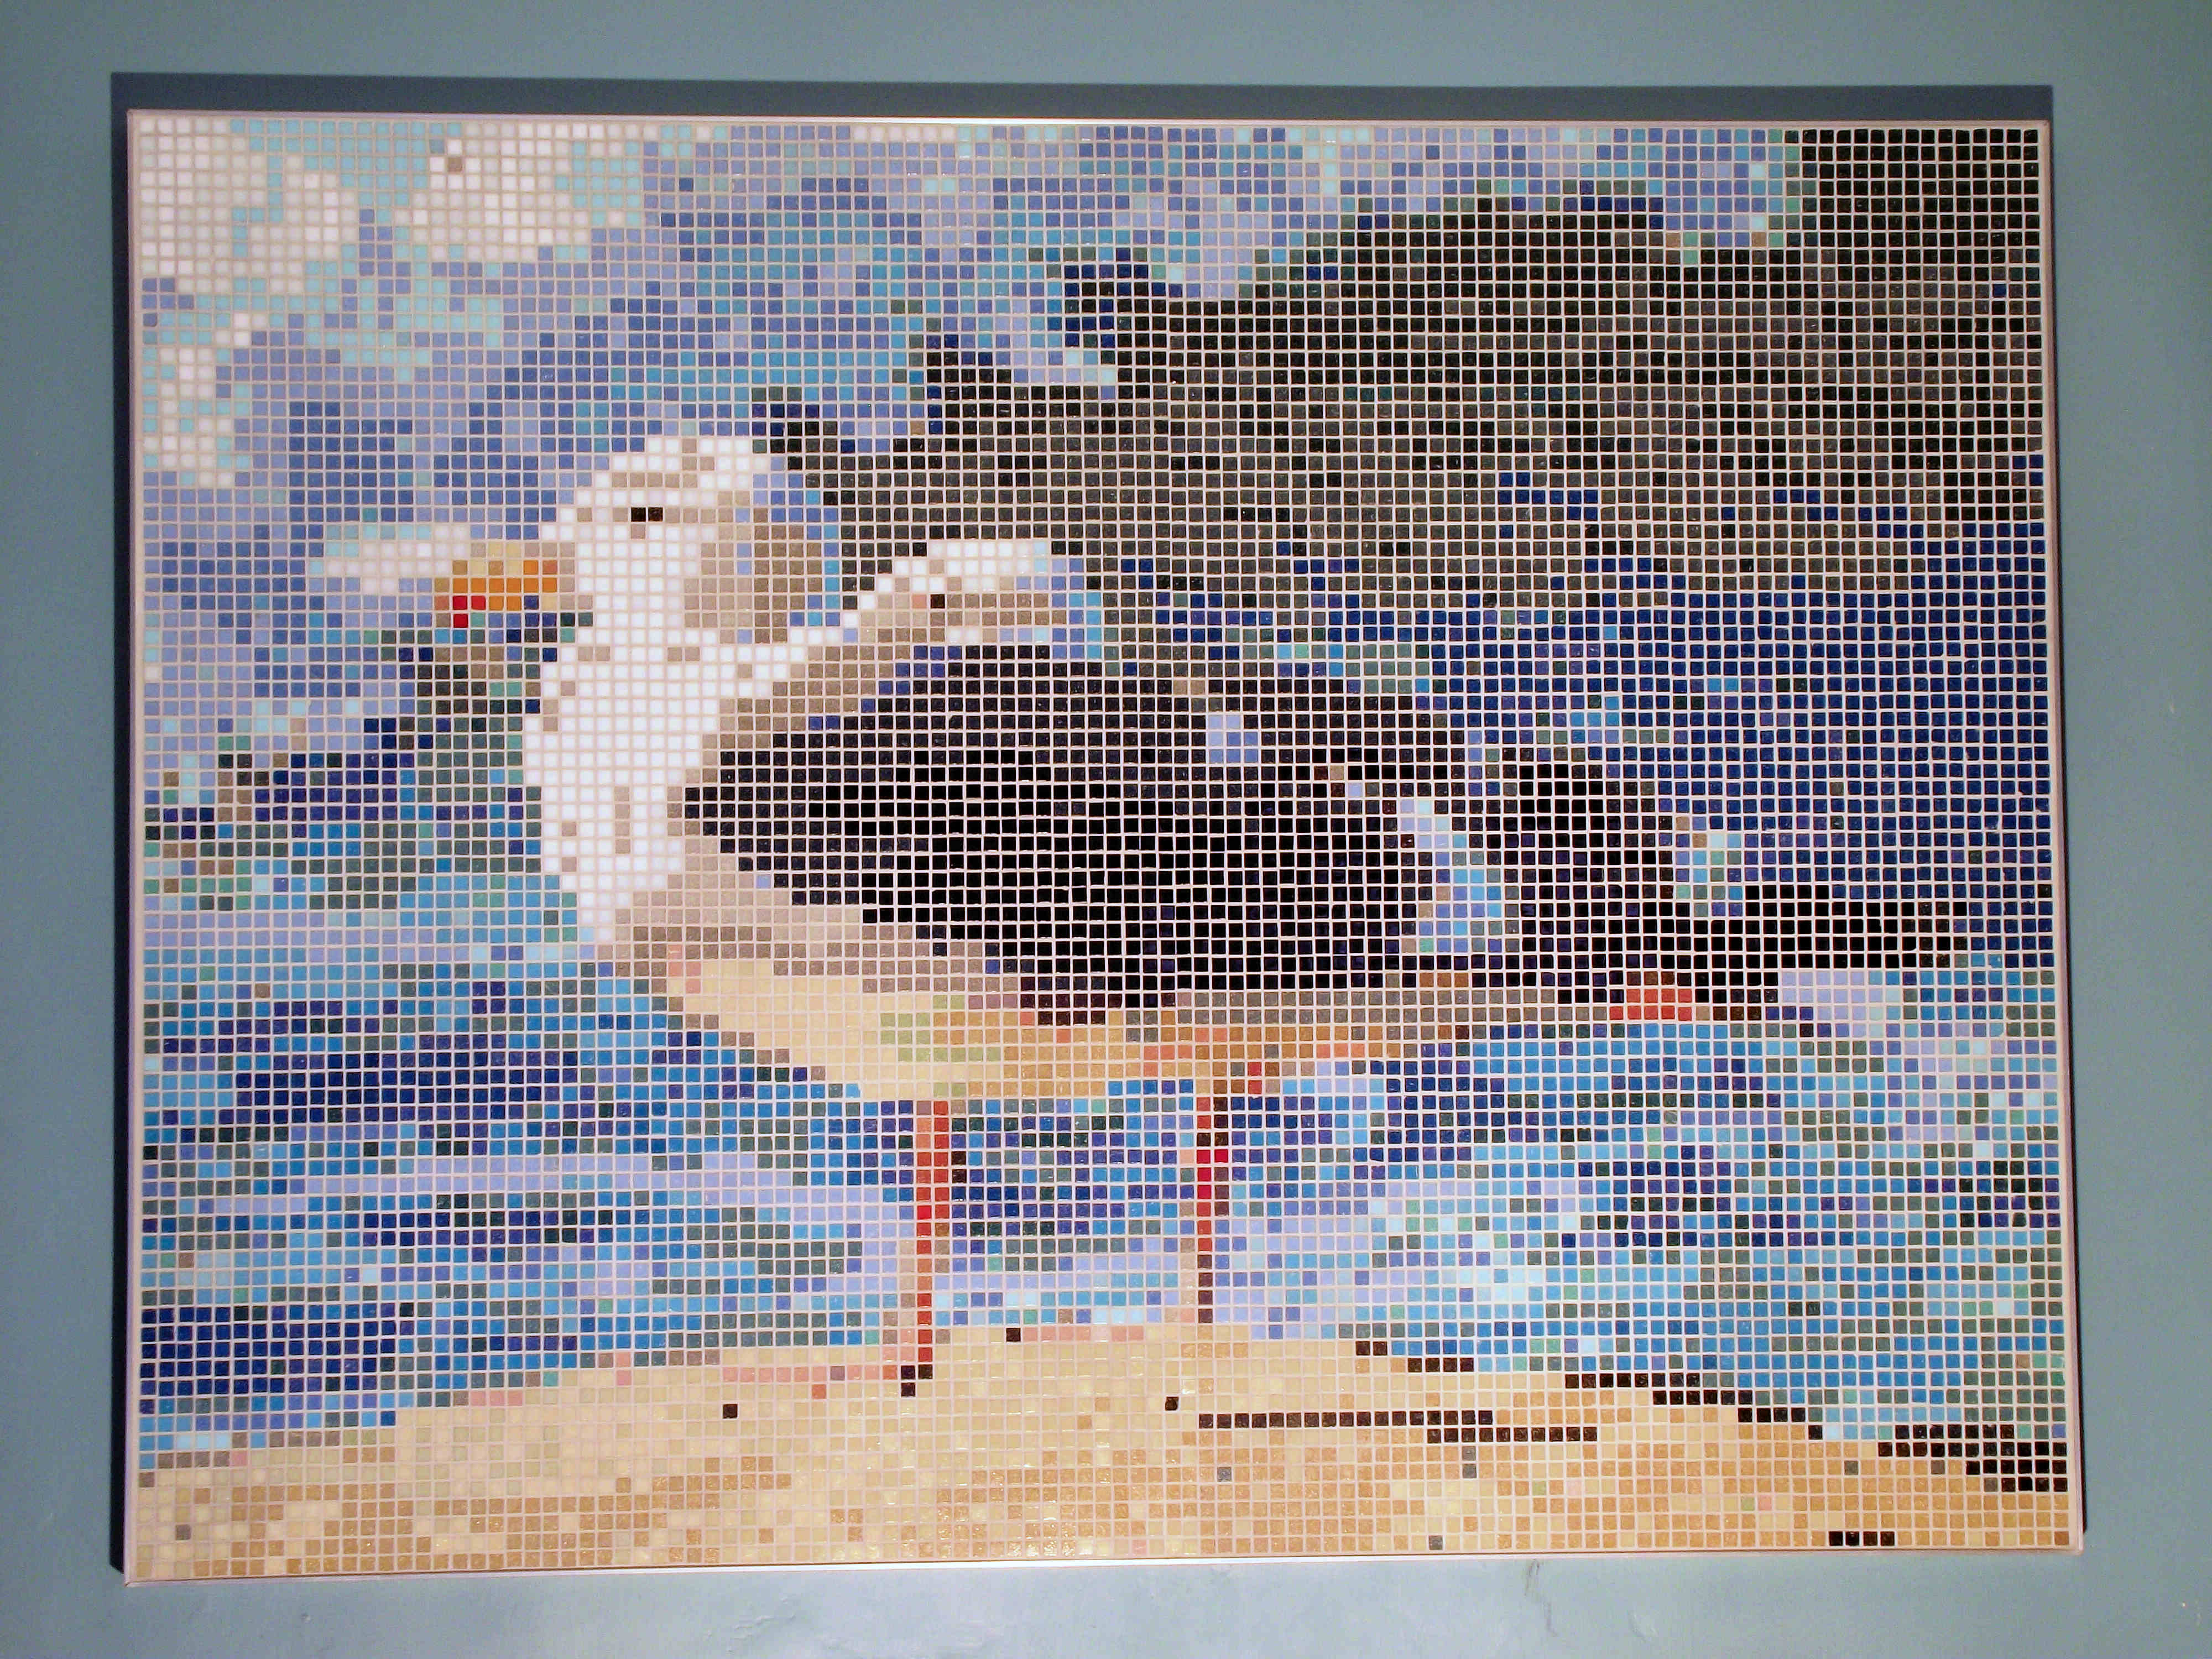 Seagulls by the Ocean Framed Mosaic